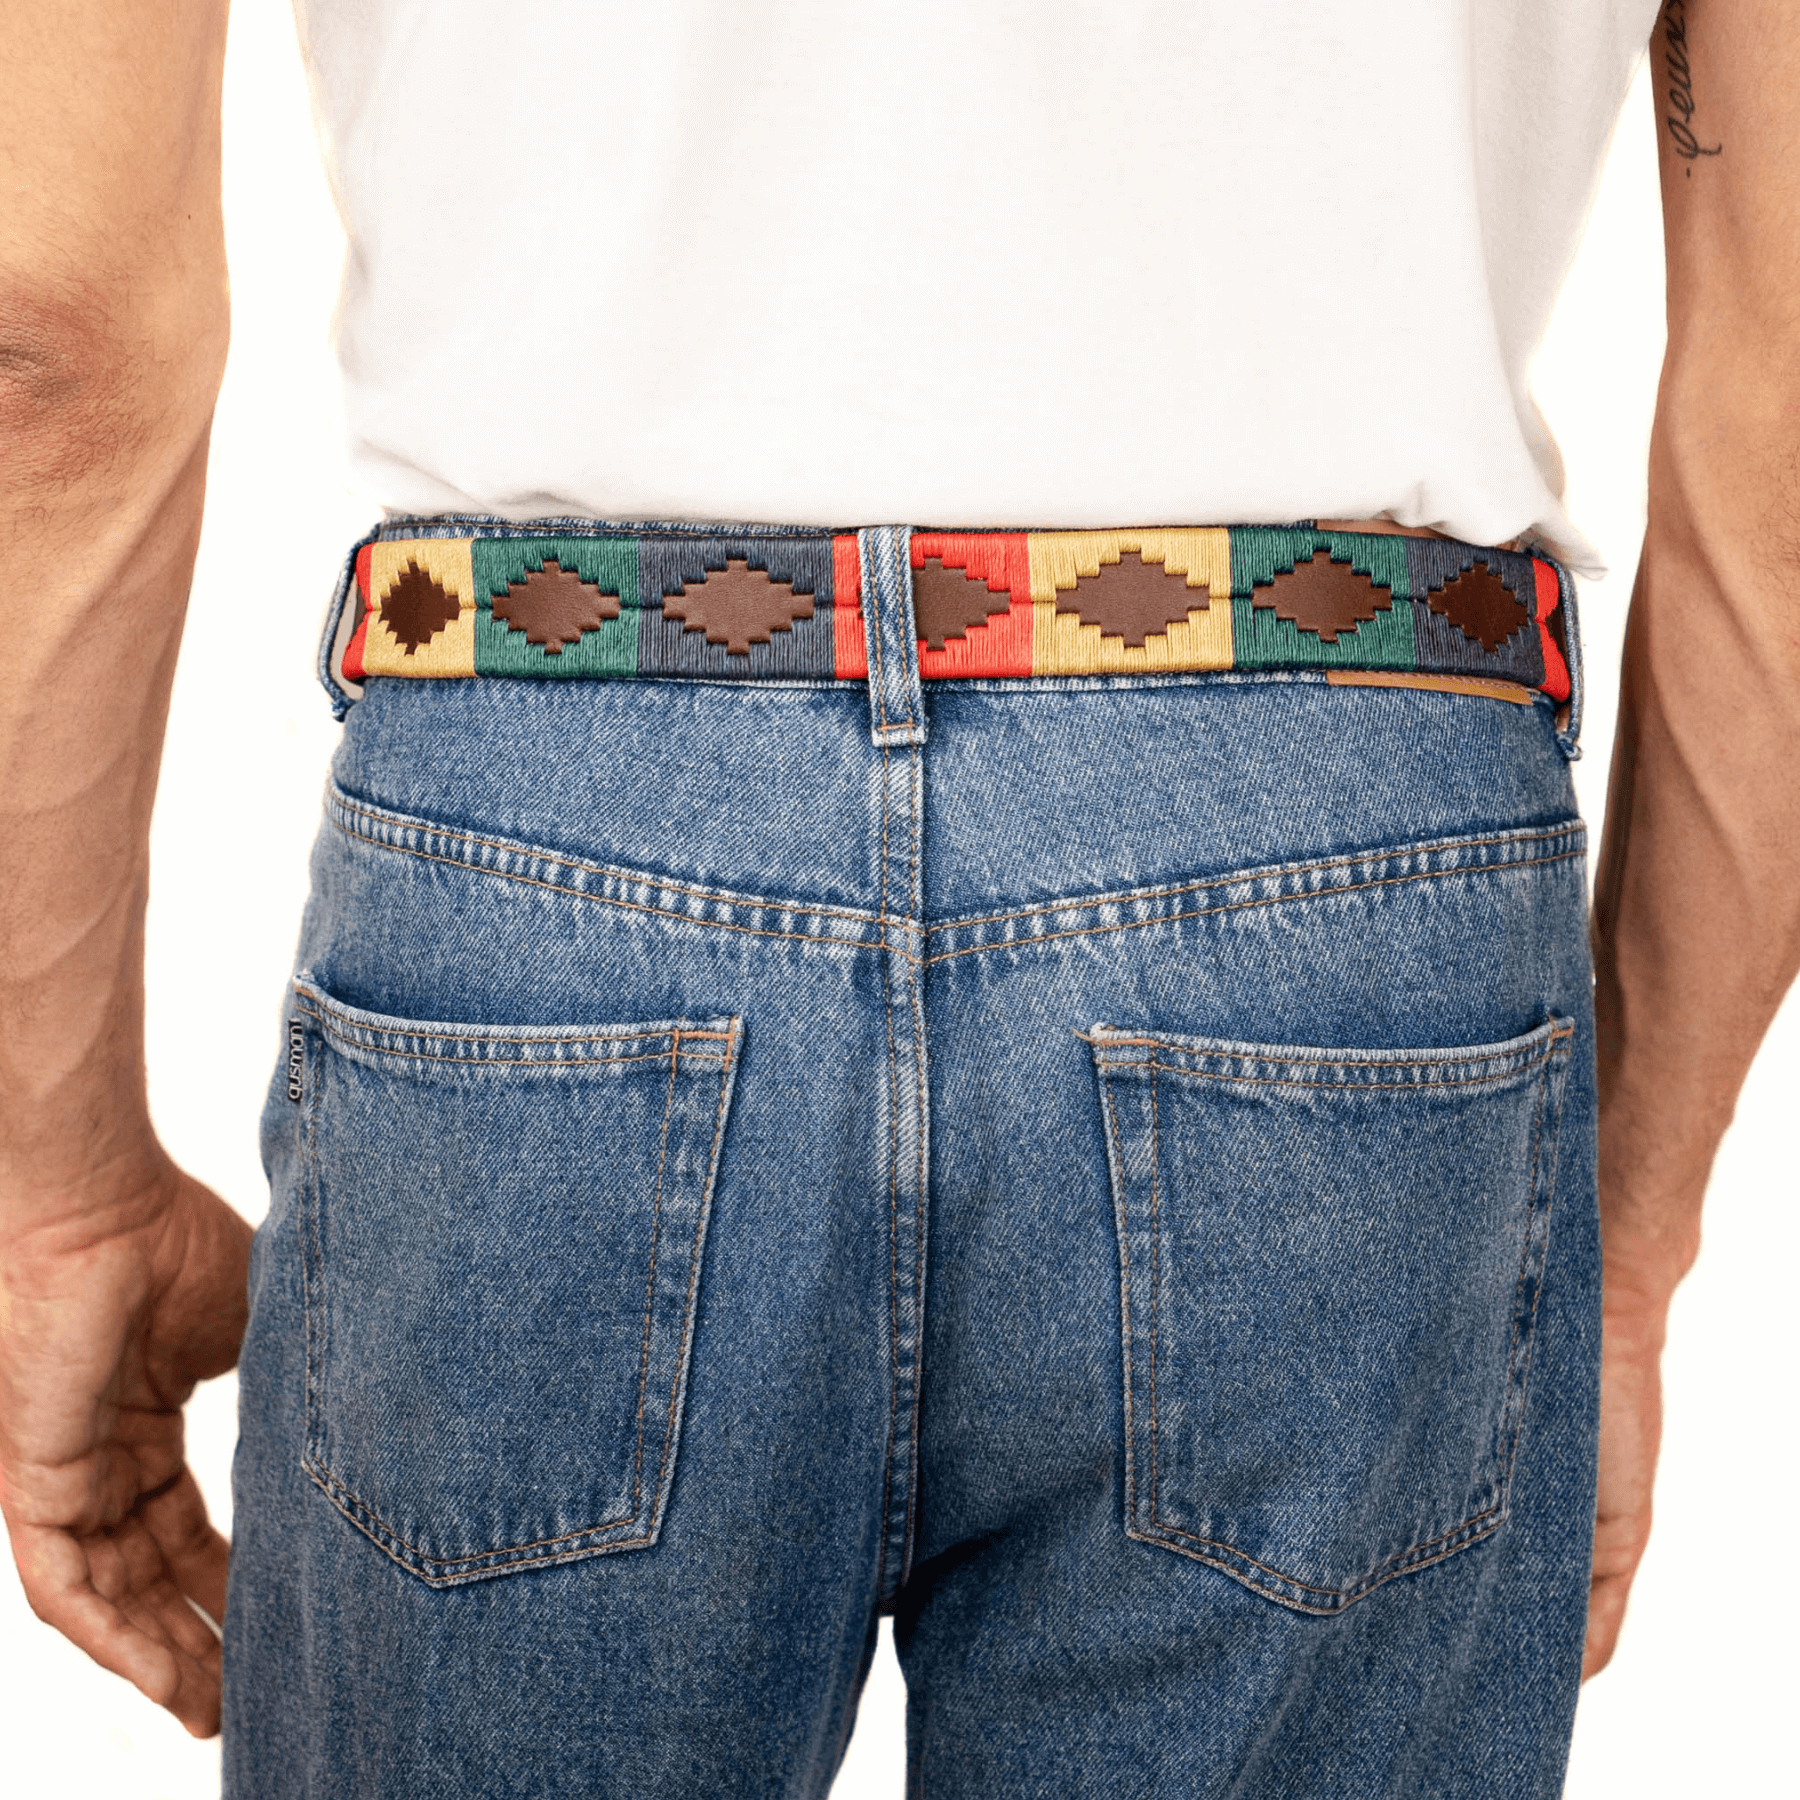 Gaucholife Belts Embroidered Belt (Multicoloured)